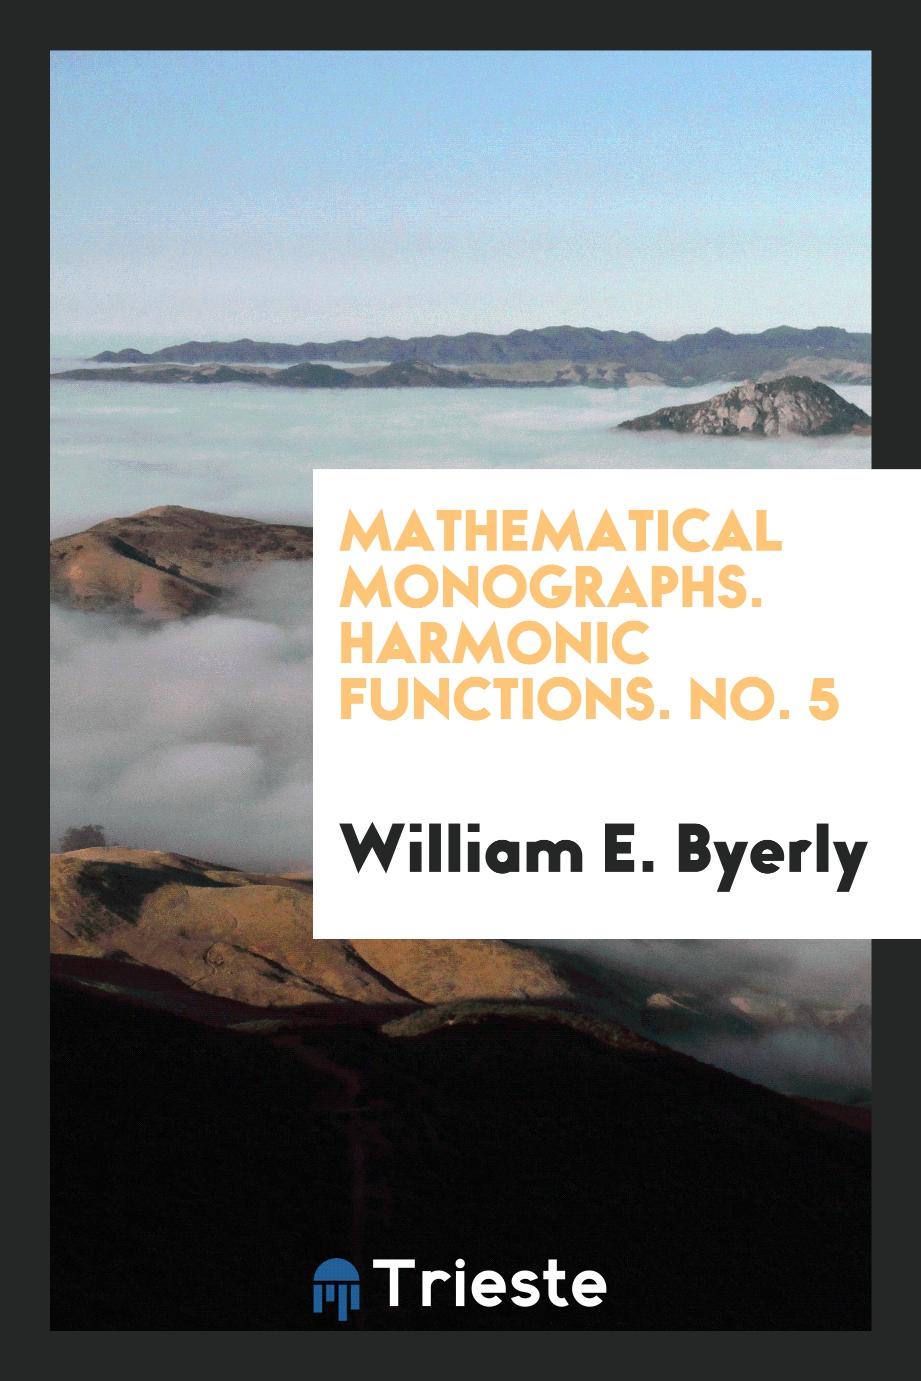 Mathematical monographs. Harmonic Functions. No. 5